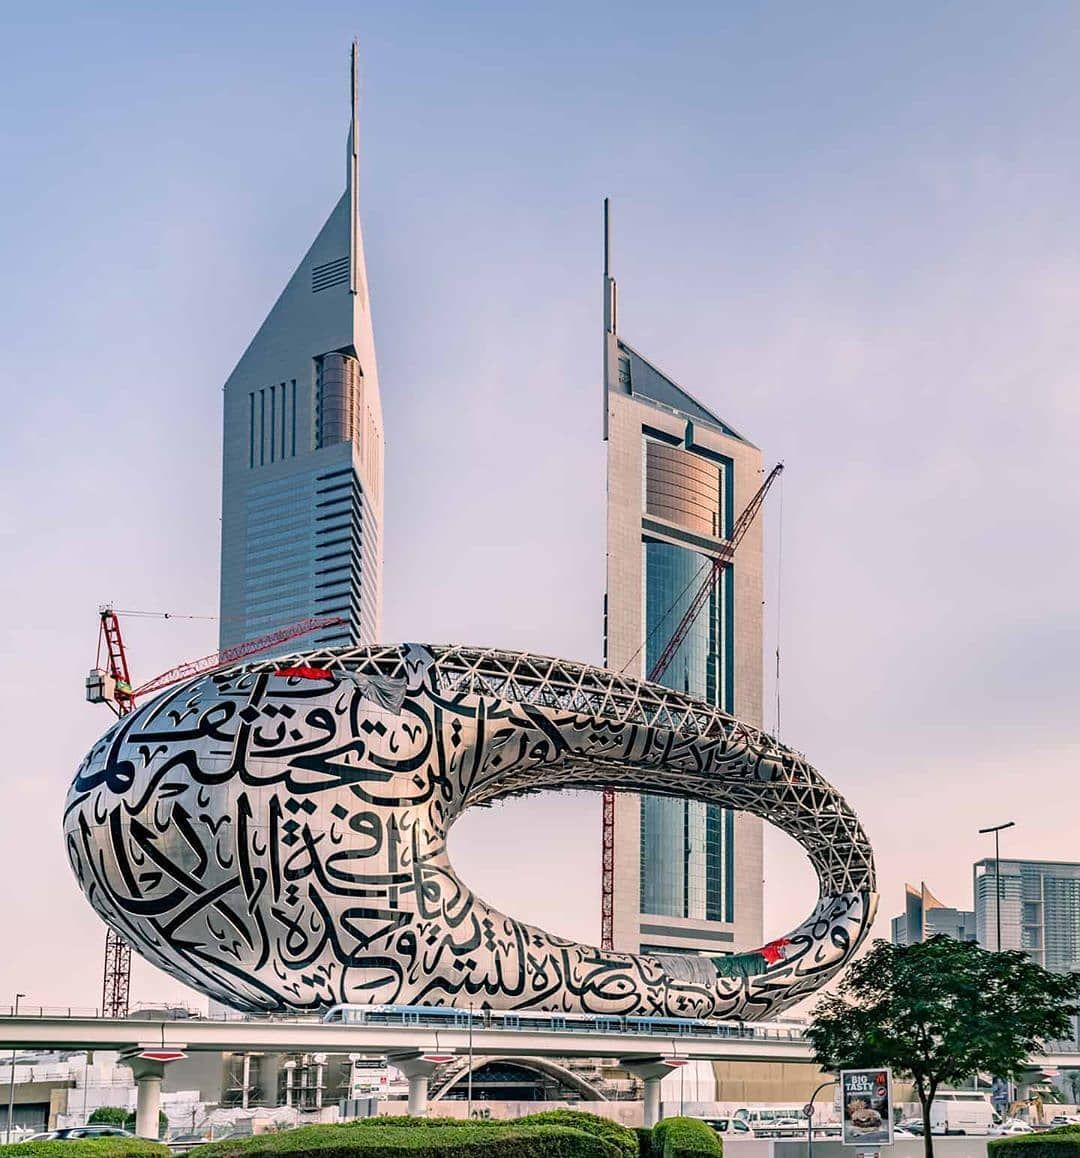 Nomads Tourism On Instagram An Architectural Wonder Dubai S